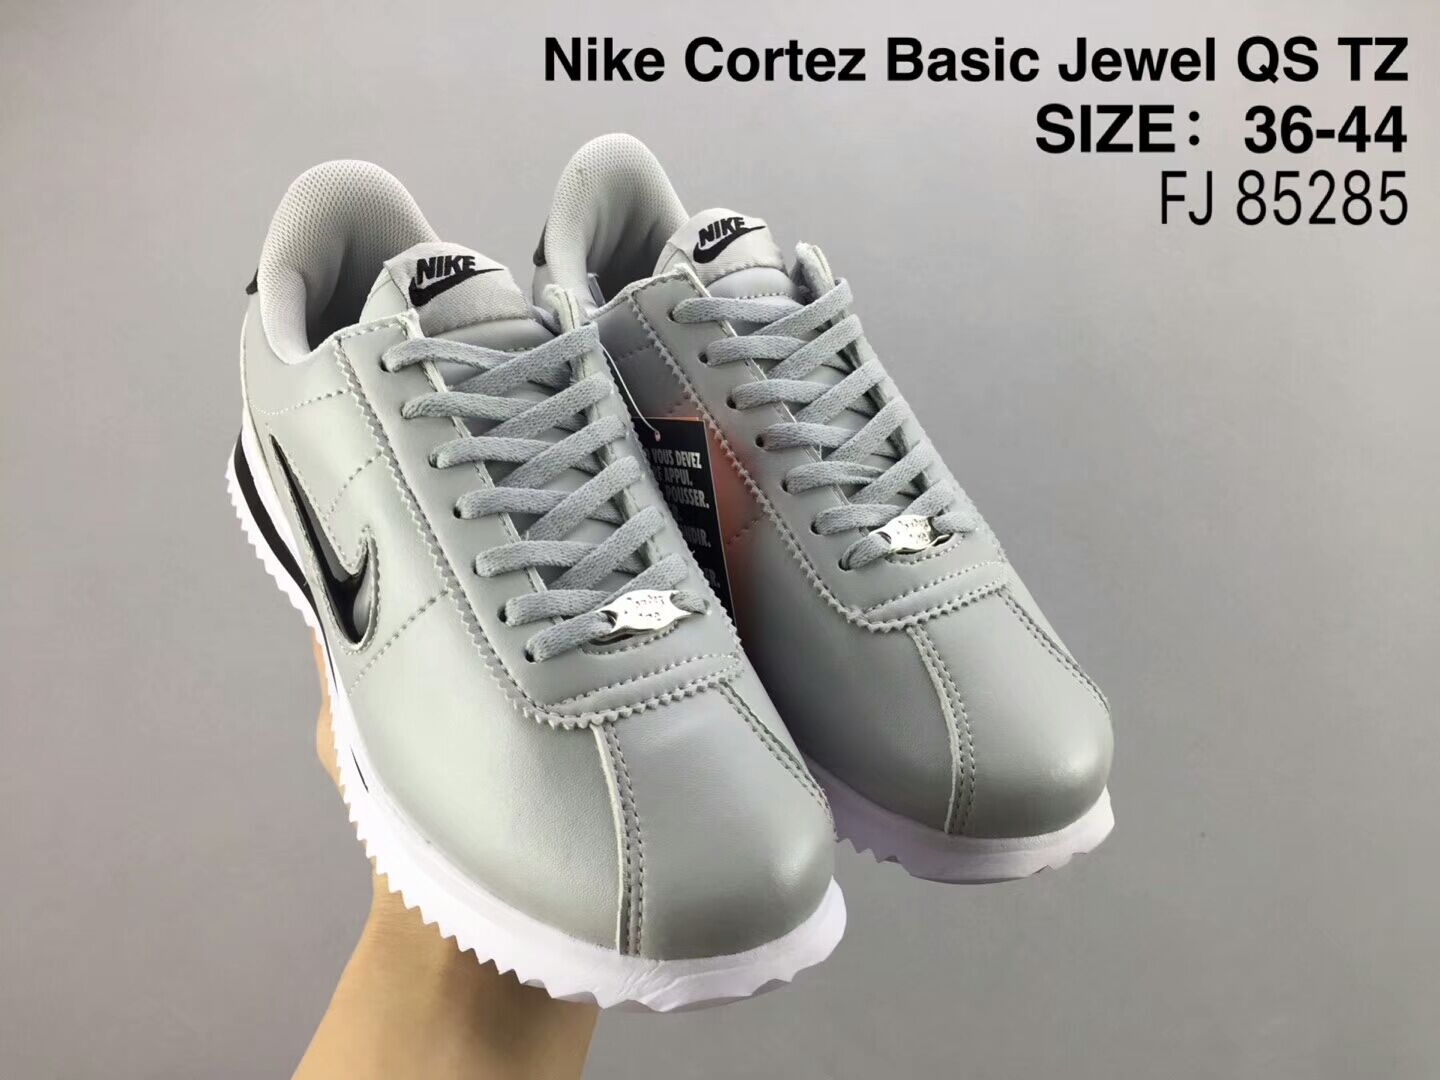 NiKe Cortez Basic Jewel QS TZ Grey Black Shoes